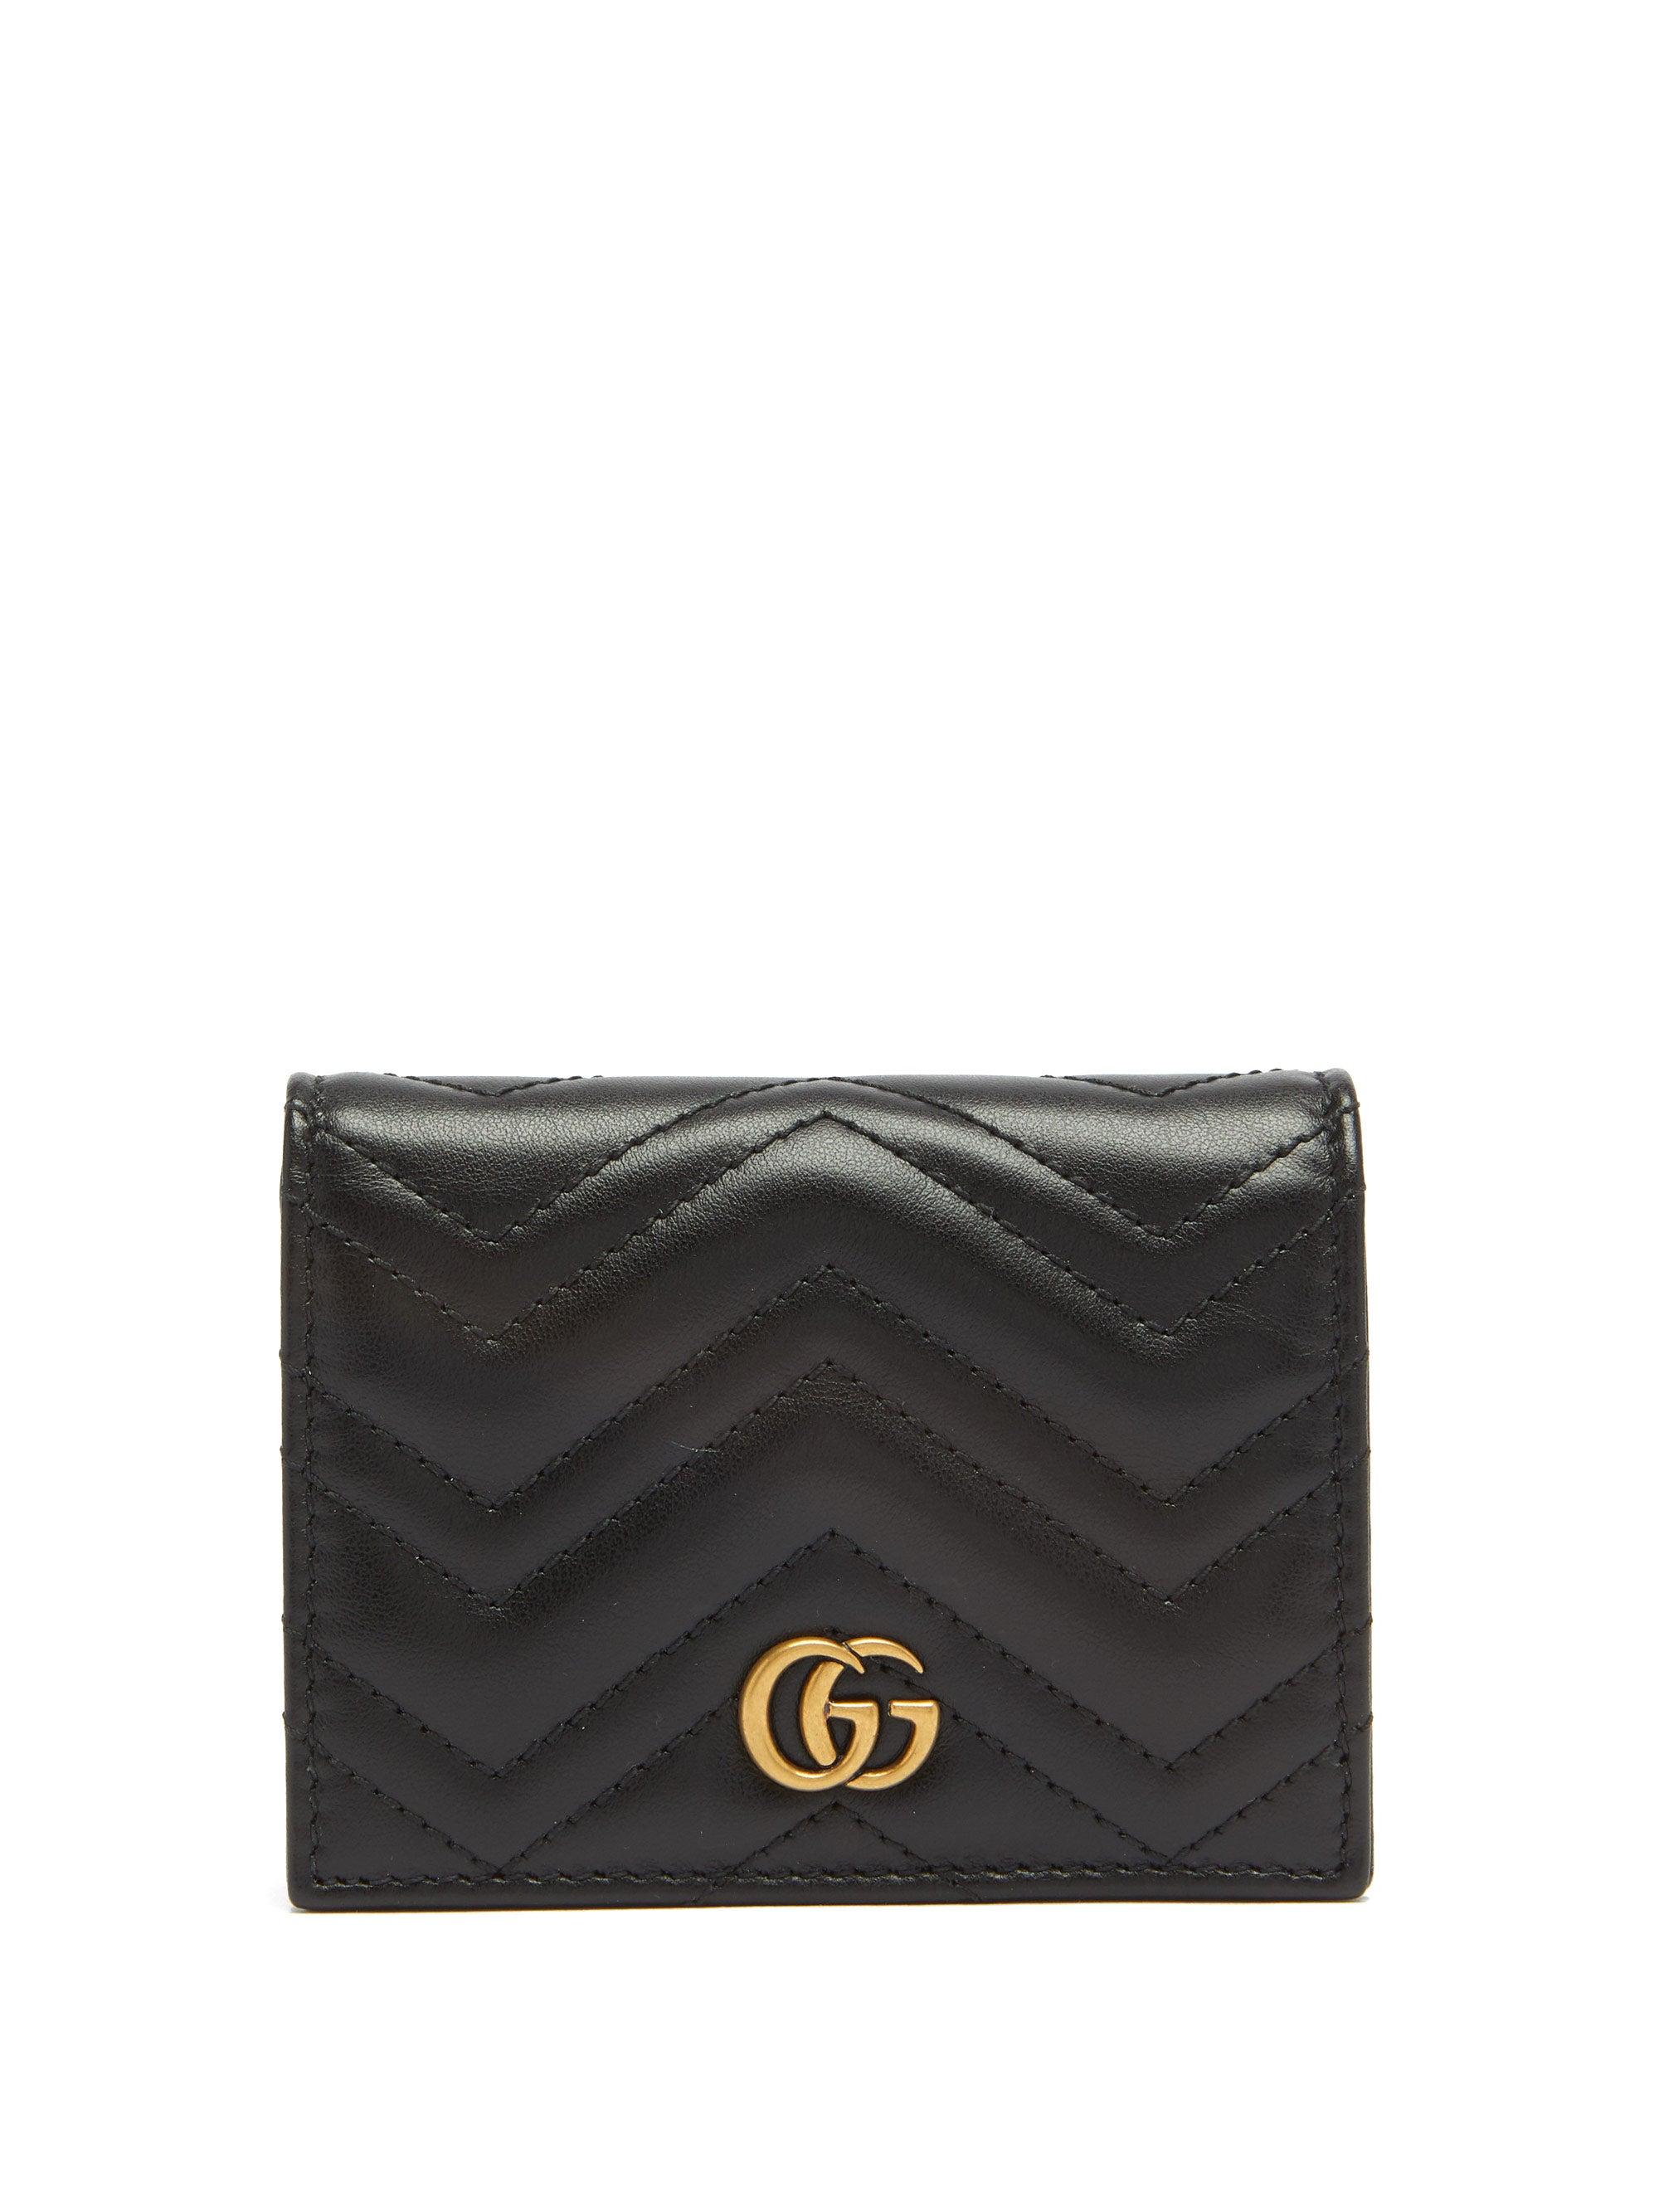 Den anden dag let mammal Gucci Leather Calfskin Matelasse GG Marmont Card Case Black - Save 57% -  Lyst